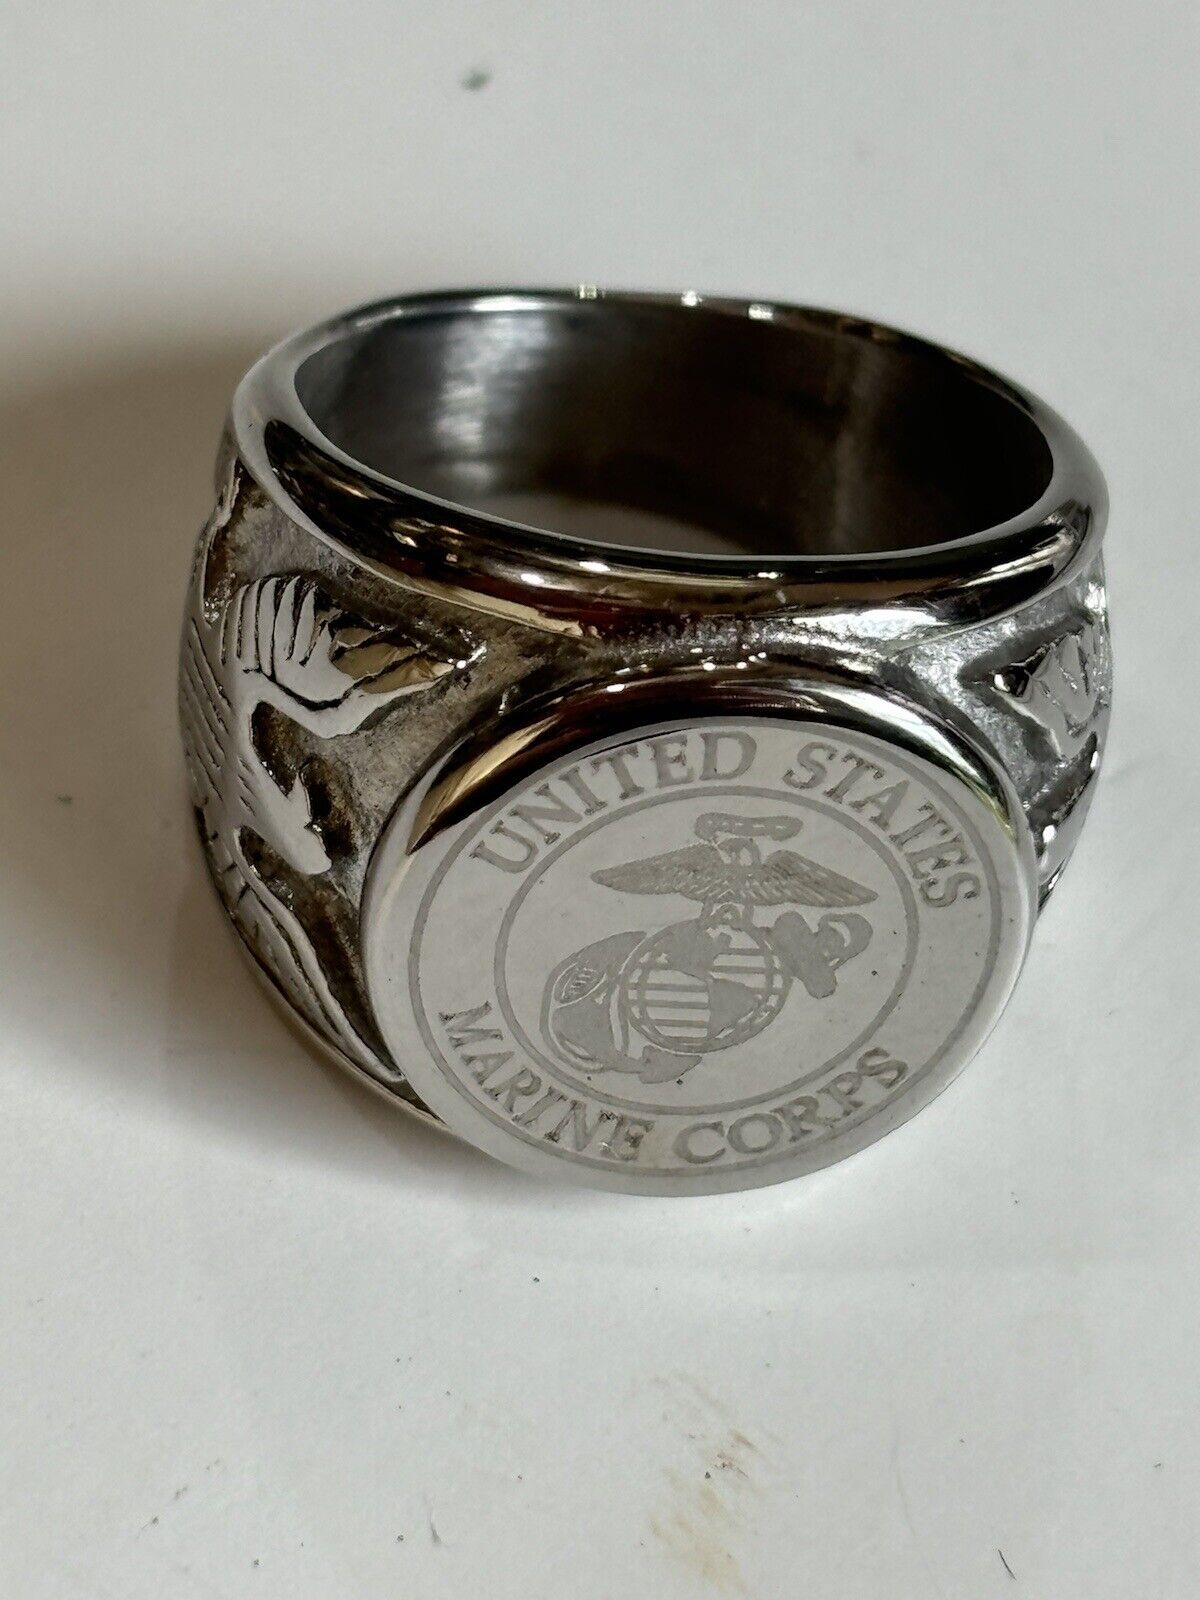 United States Marine Corps Ring